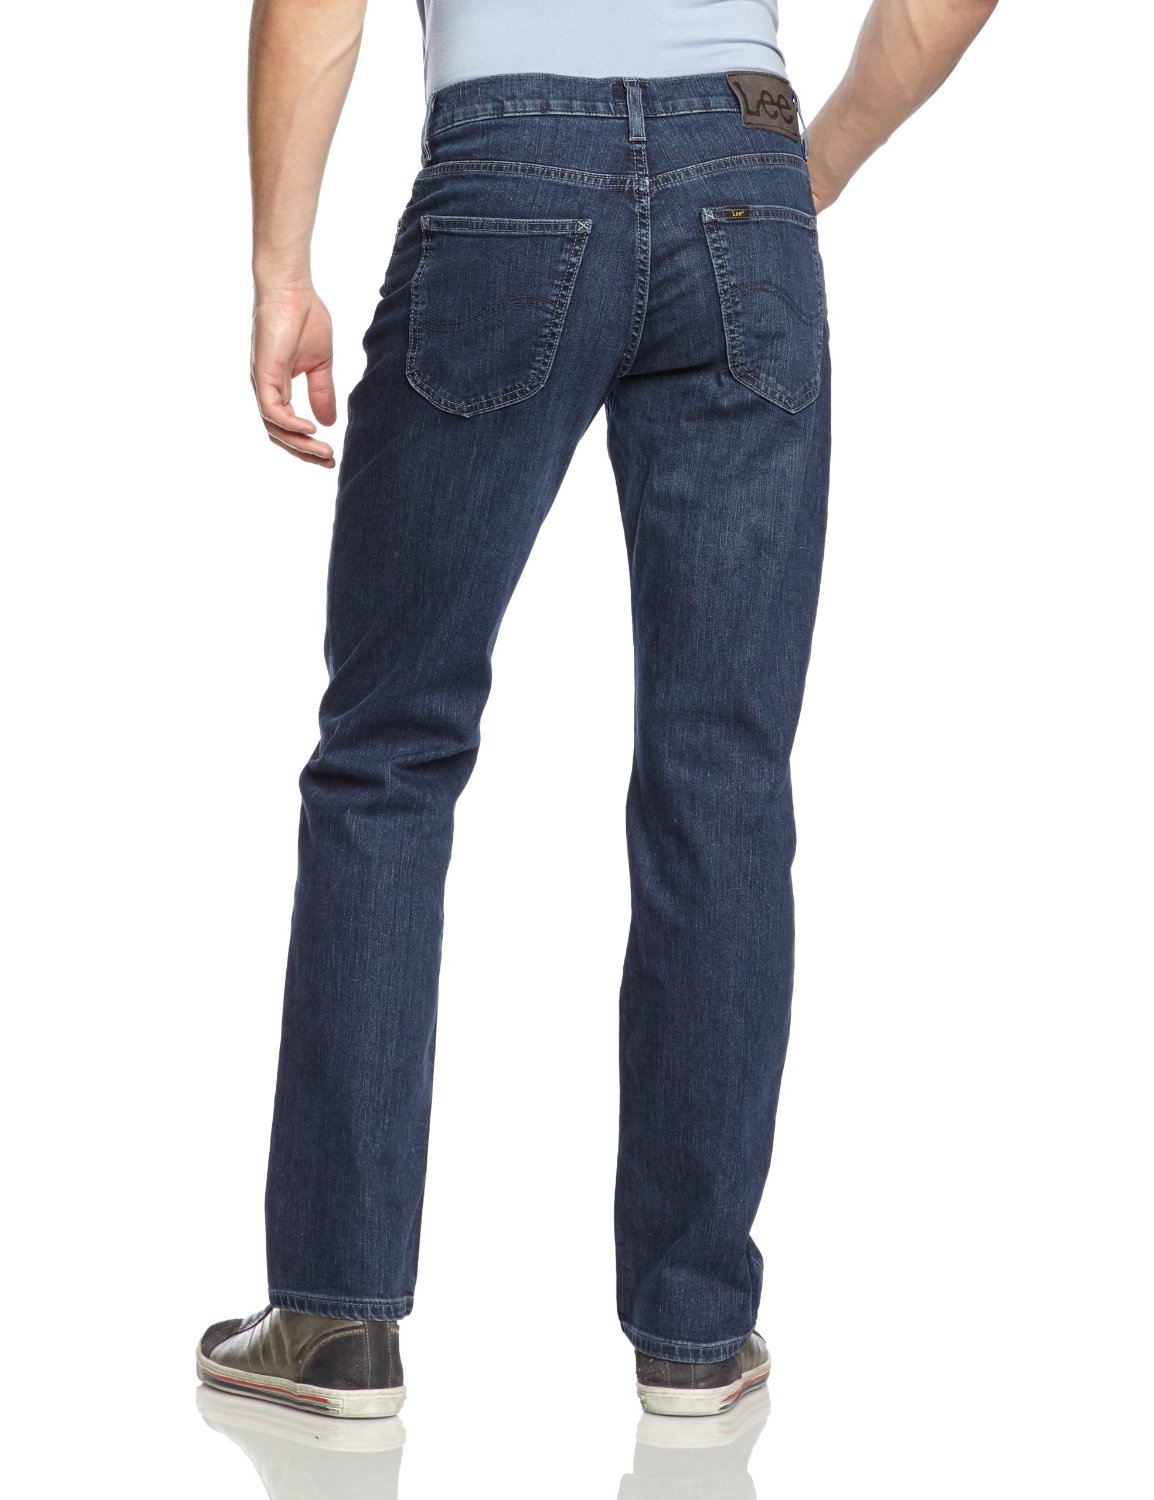 New Lee Brooklyn Mens Vintage Stretch Jeans Easy Daze Blue Faded Denim Pants Ebay 